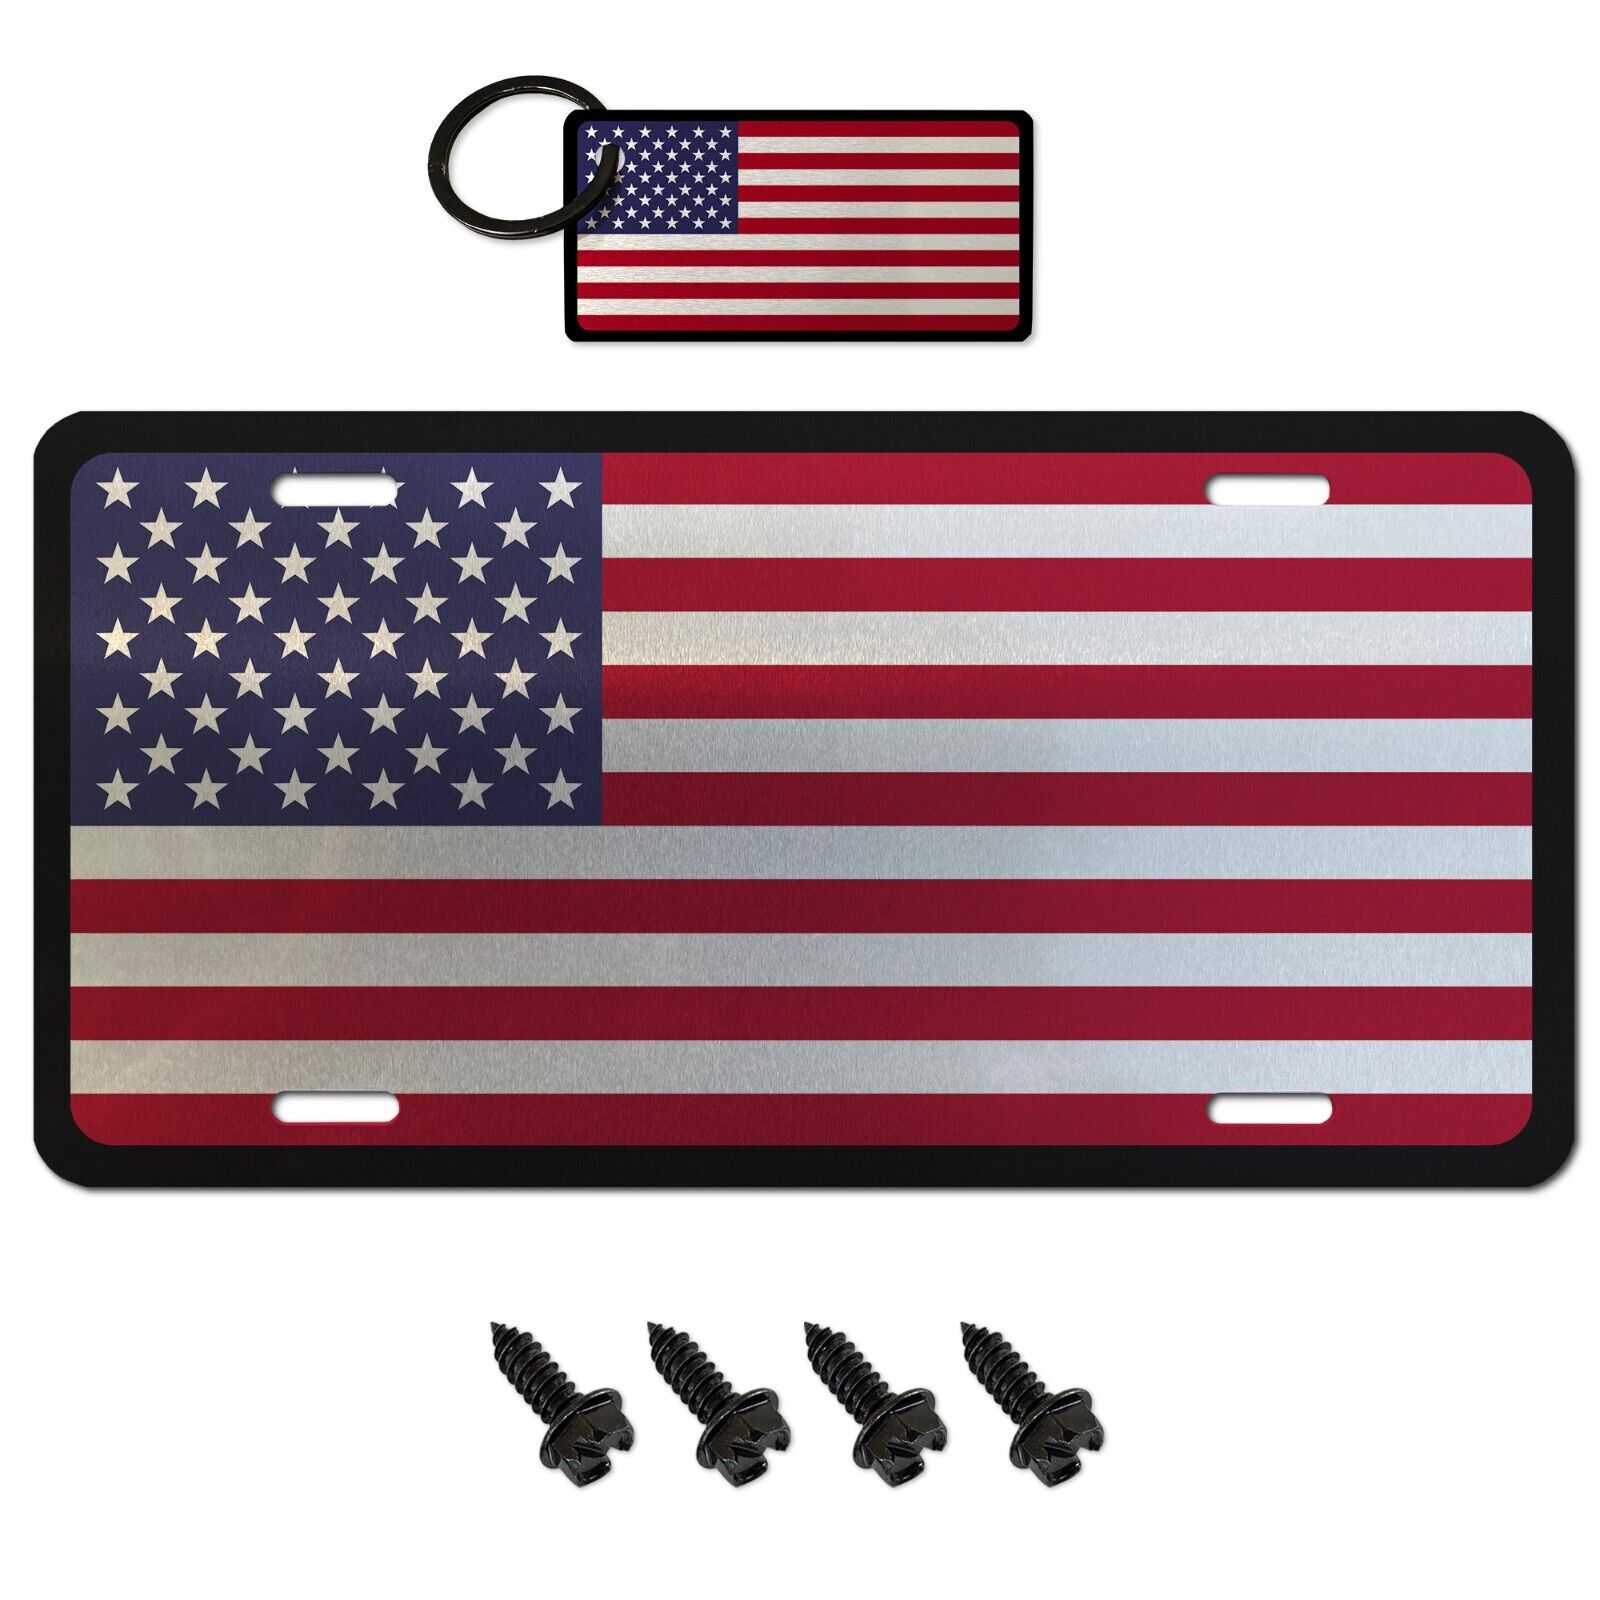 USA Made - Brushed Metal American Flag License Plate + 4 Black Screws + Keychain